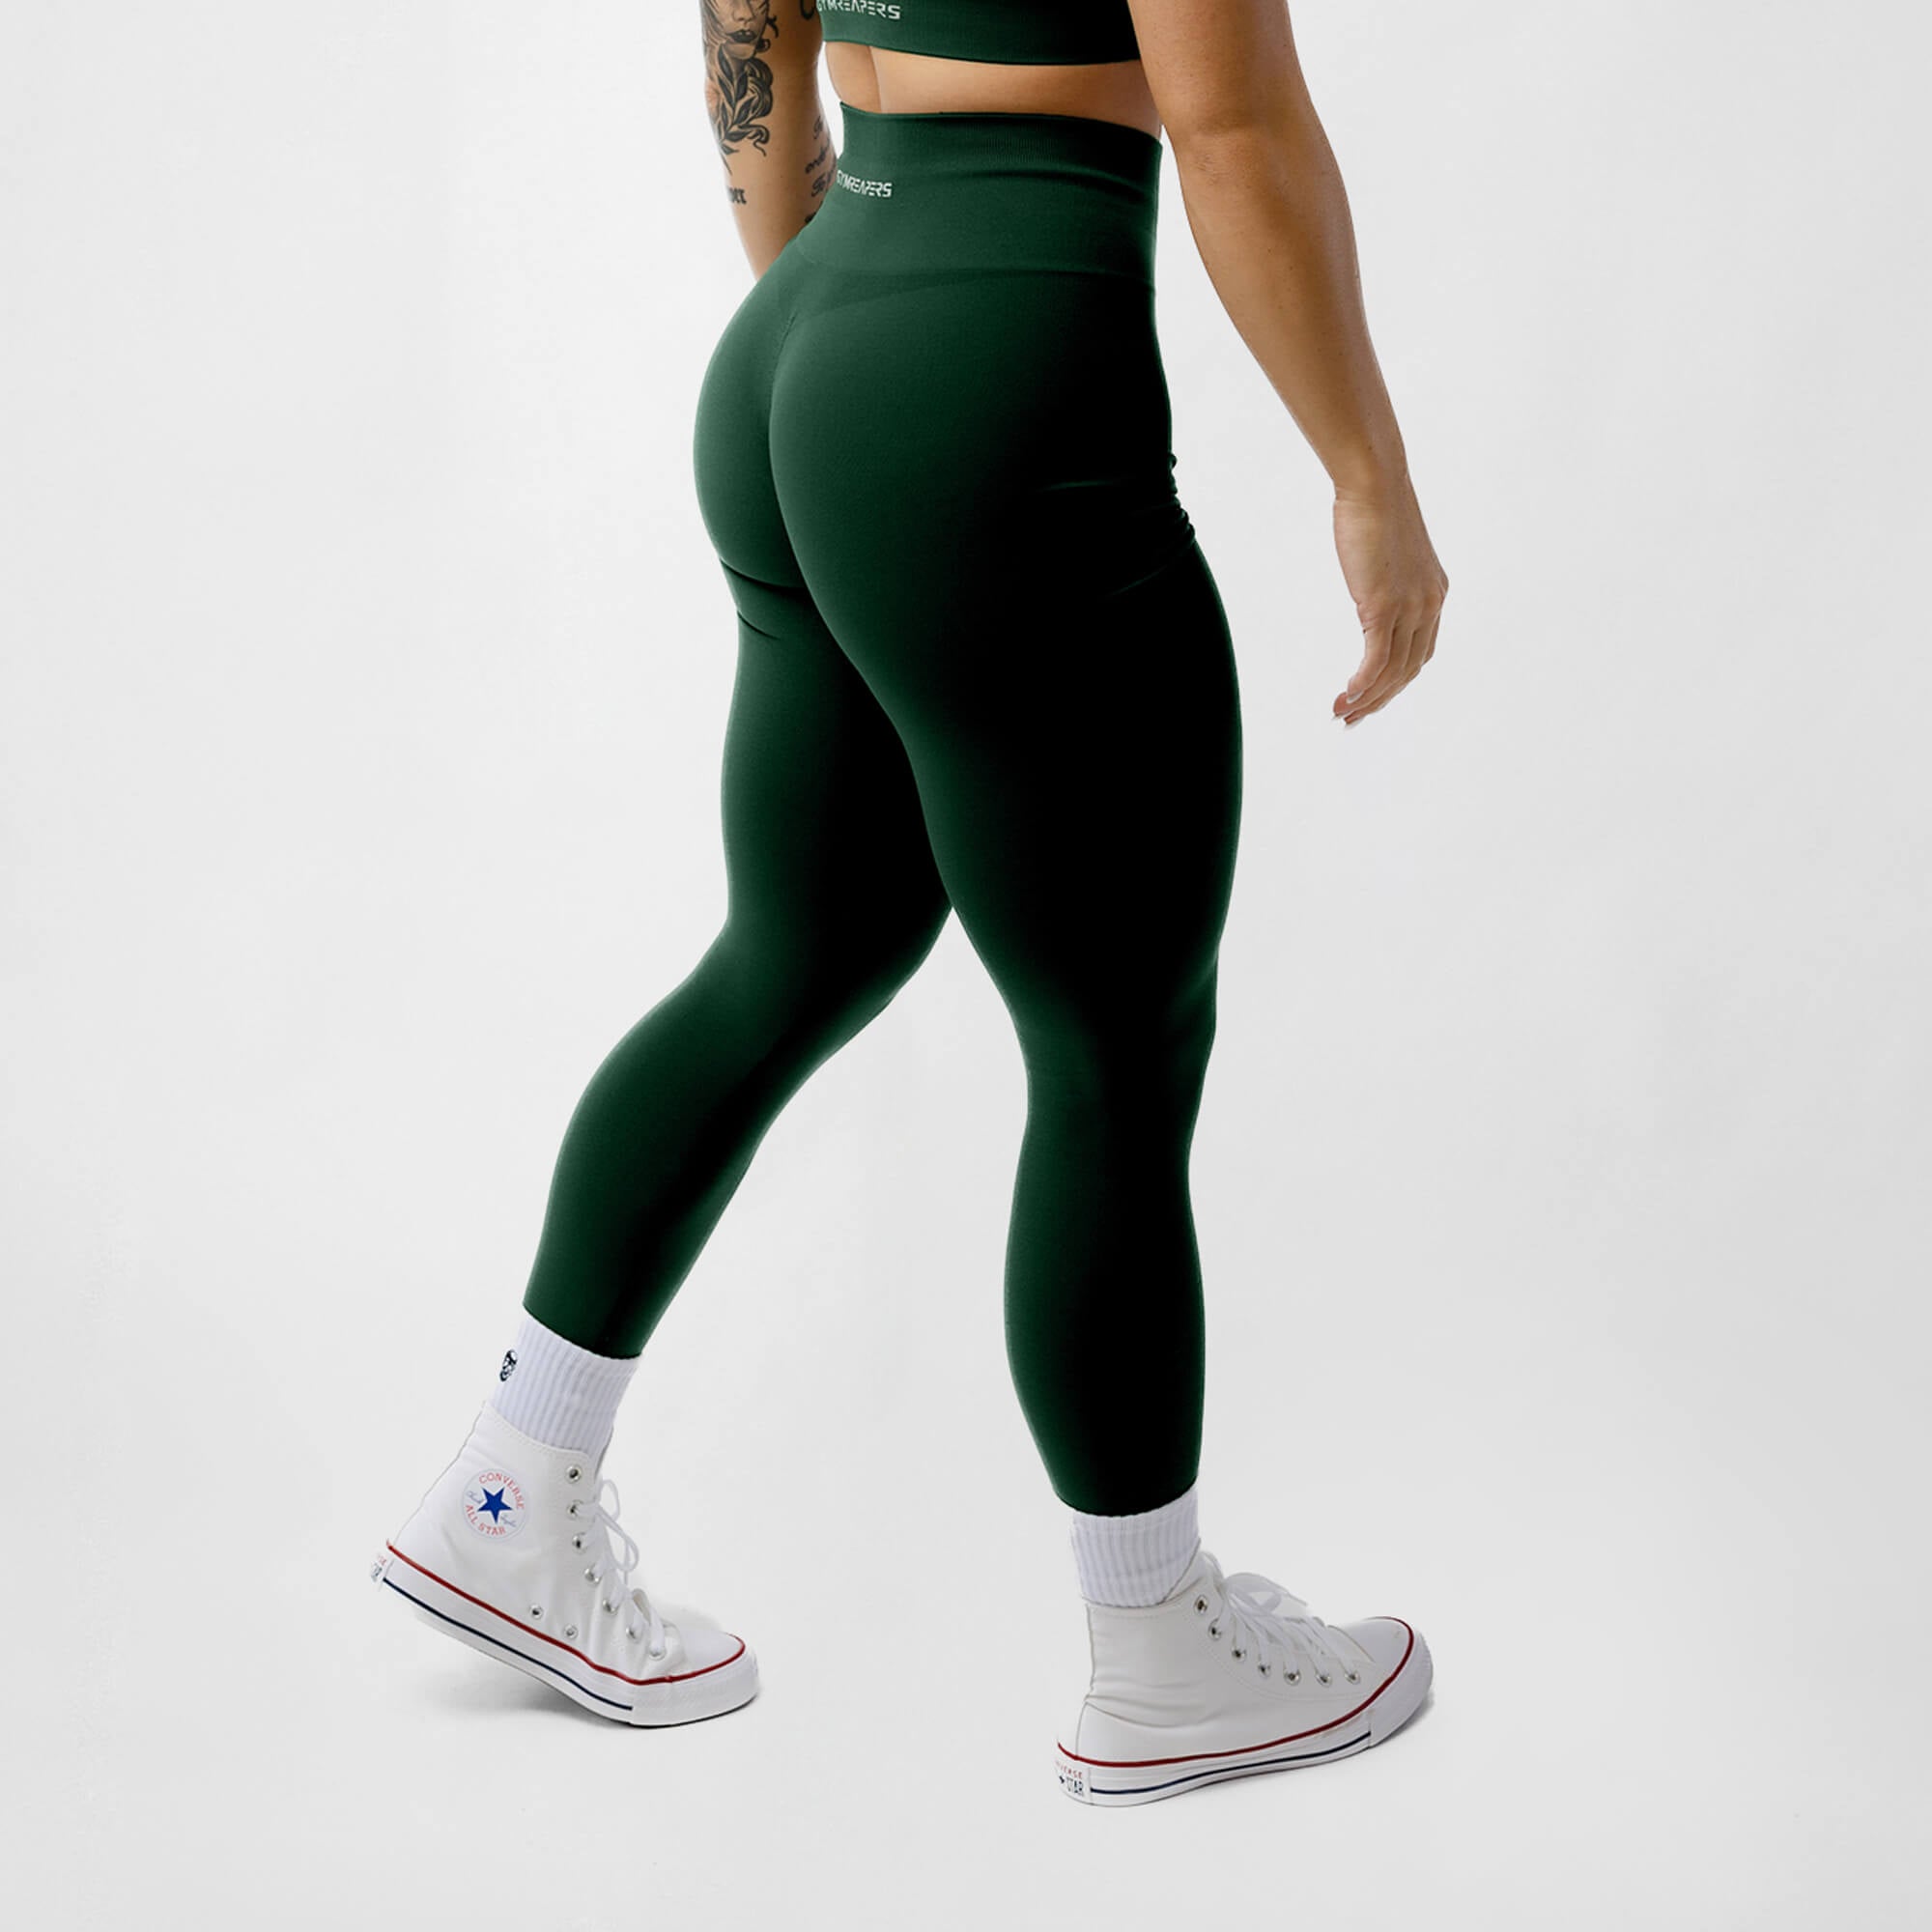 Alphalete amplify forest green leggings - Athletic apparel